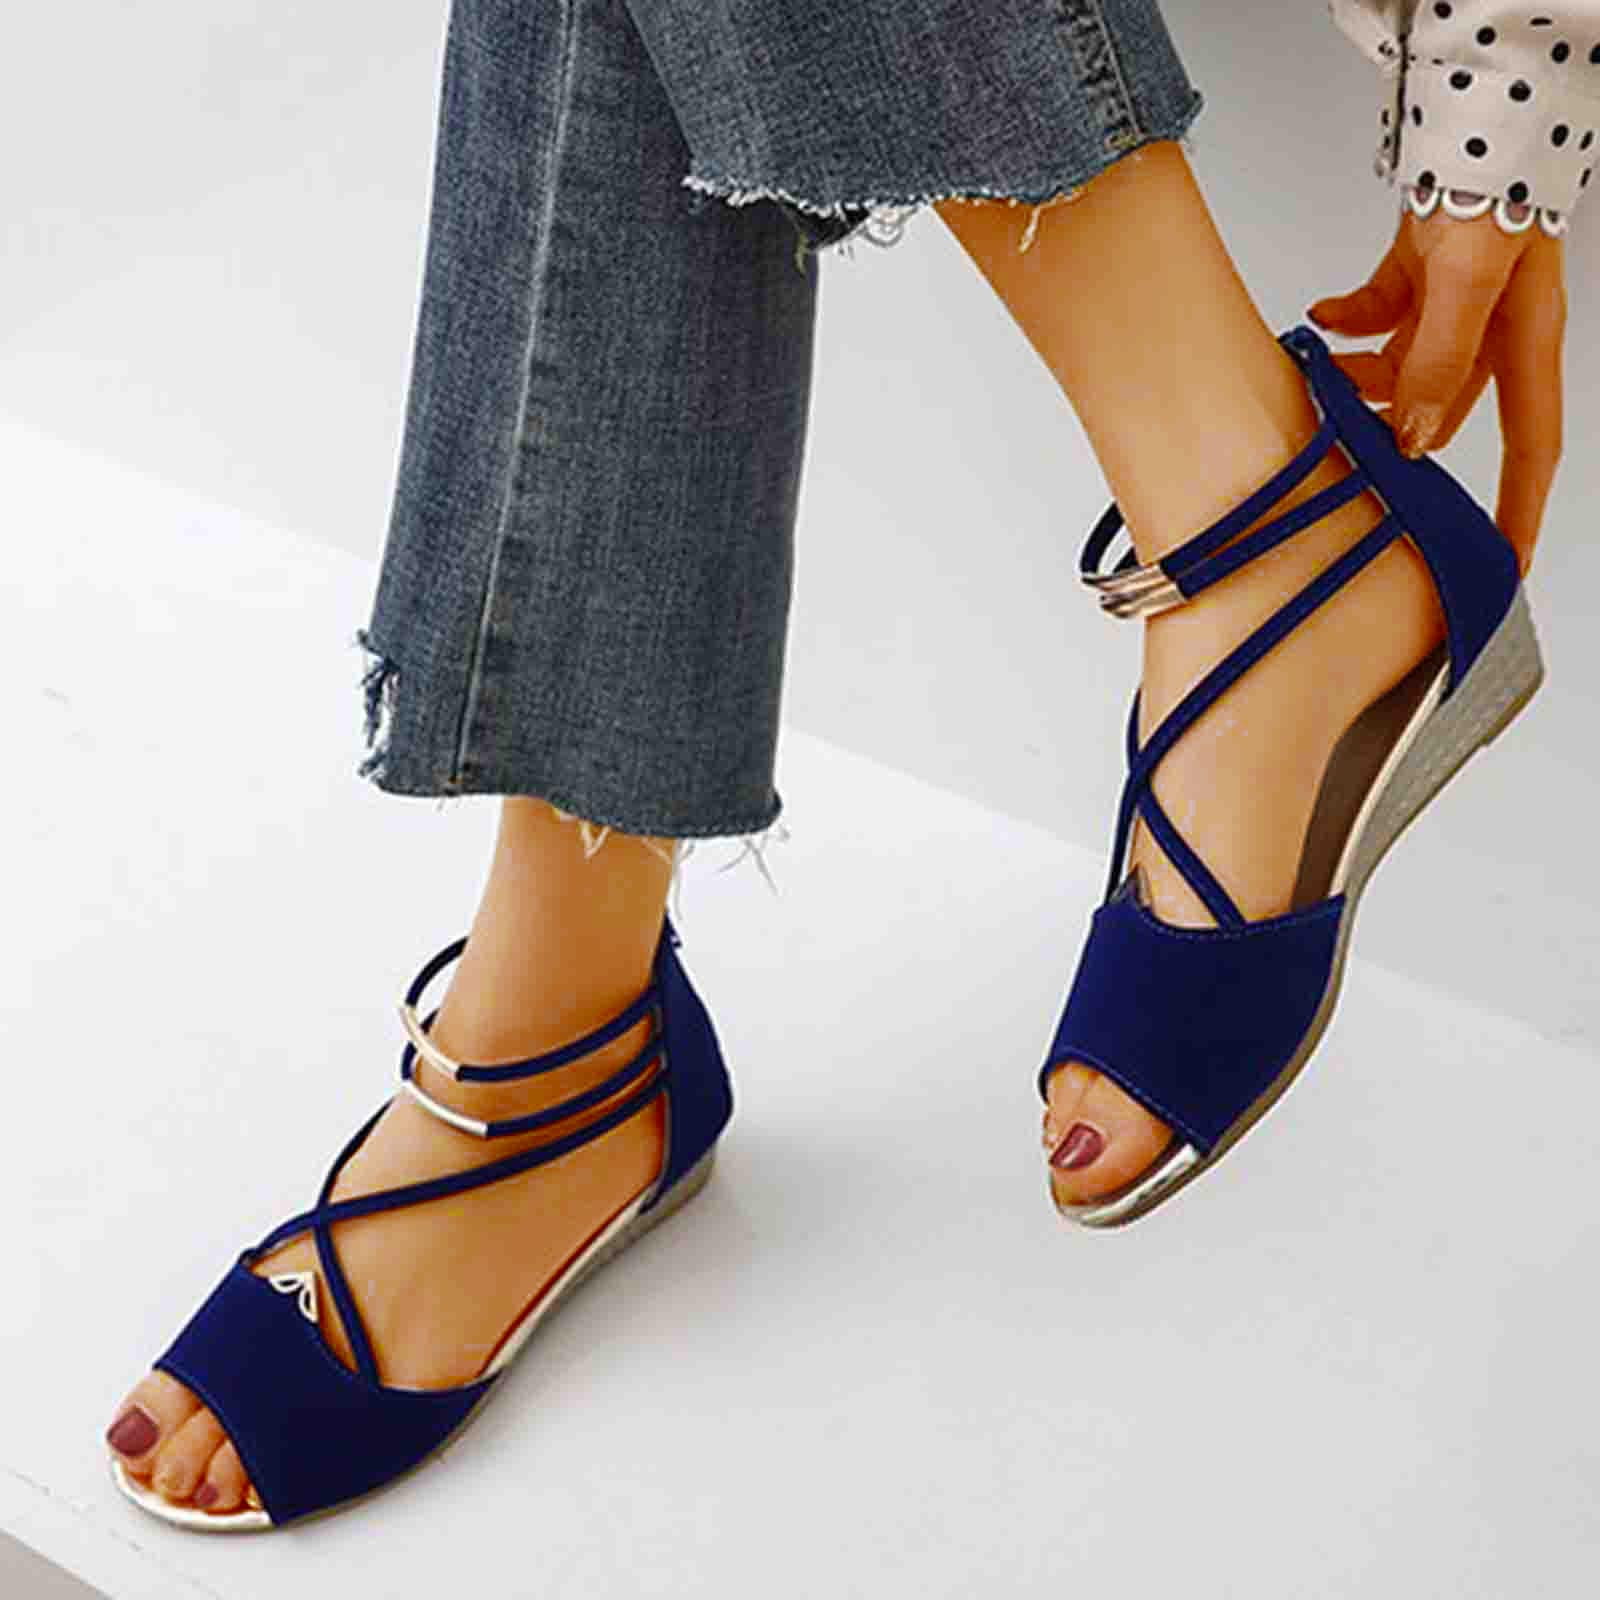 5cm Wedge Heel Sandals Women Sandals Summer Fashion Fish Mouth Bohemian  Roman